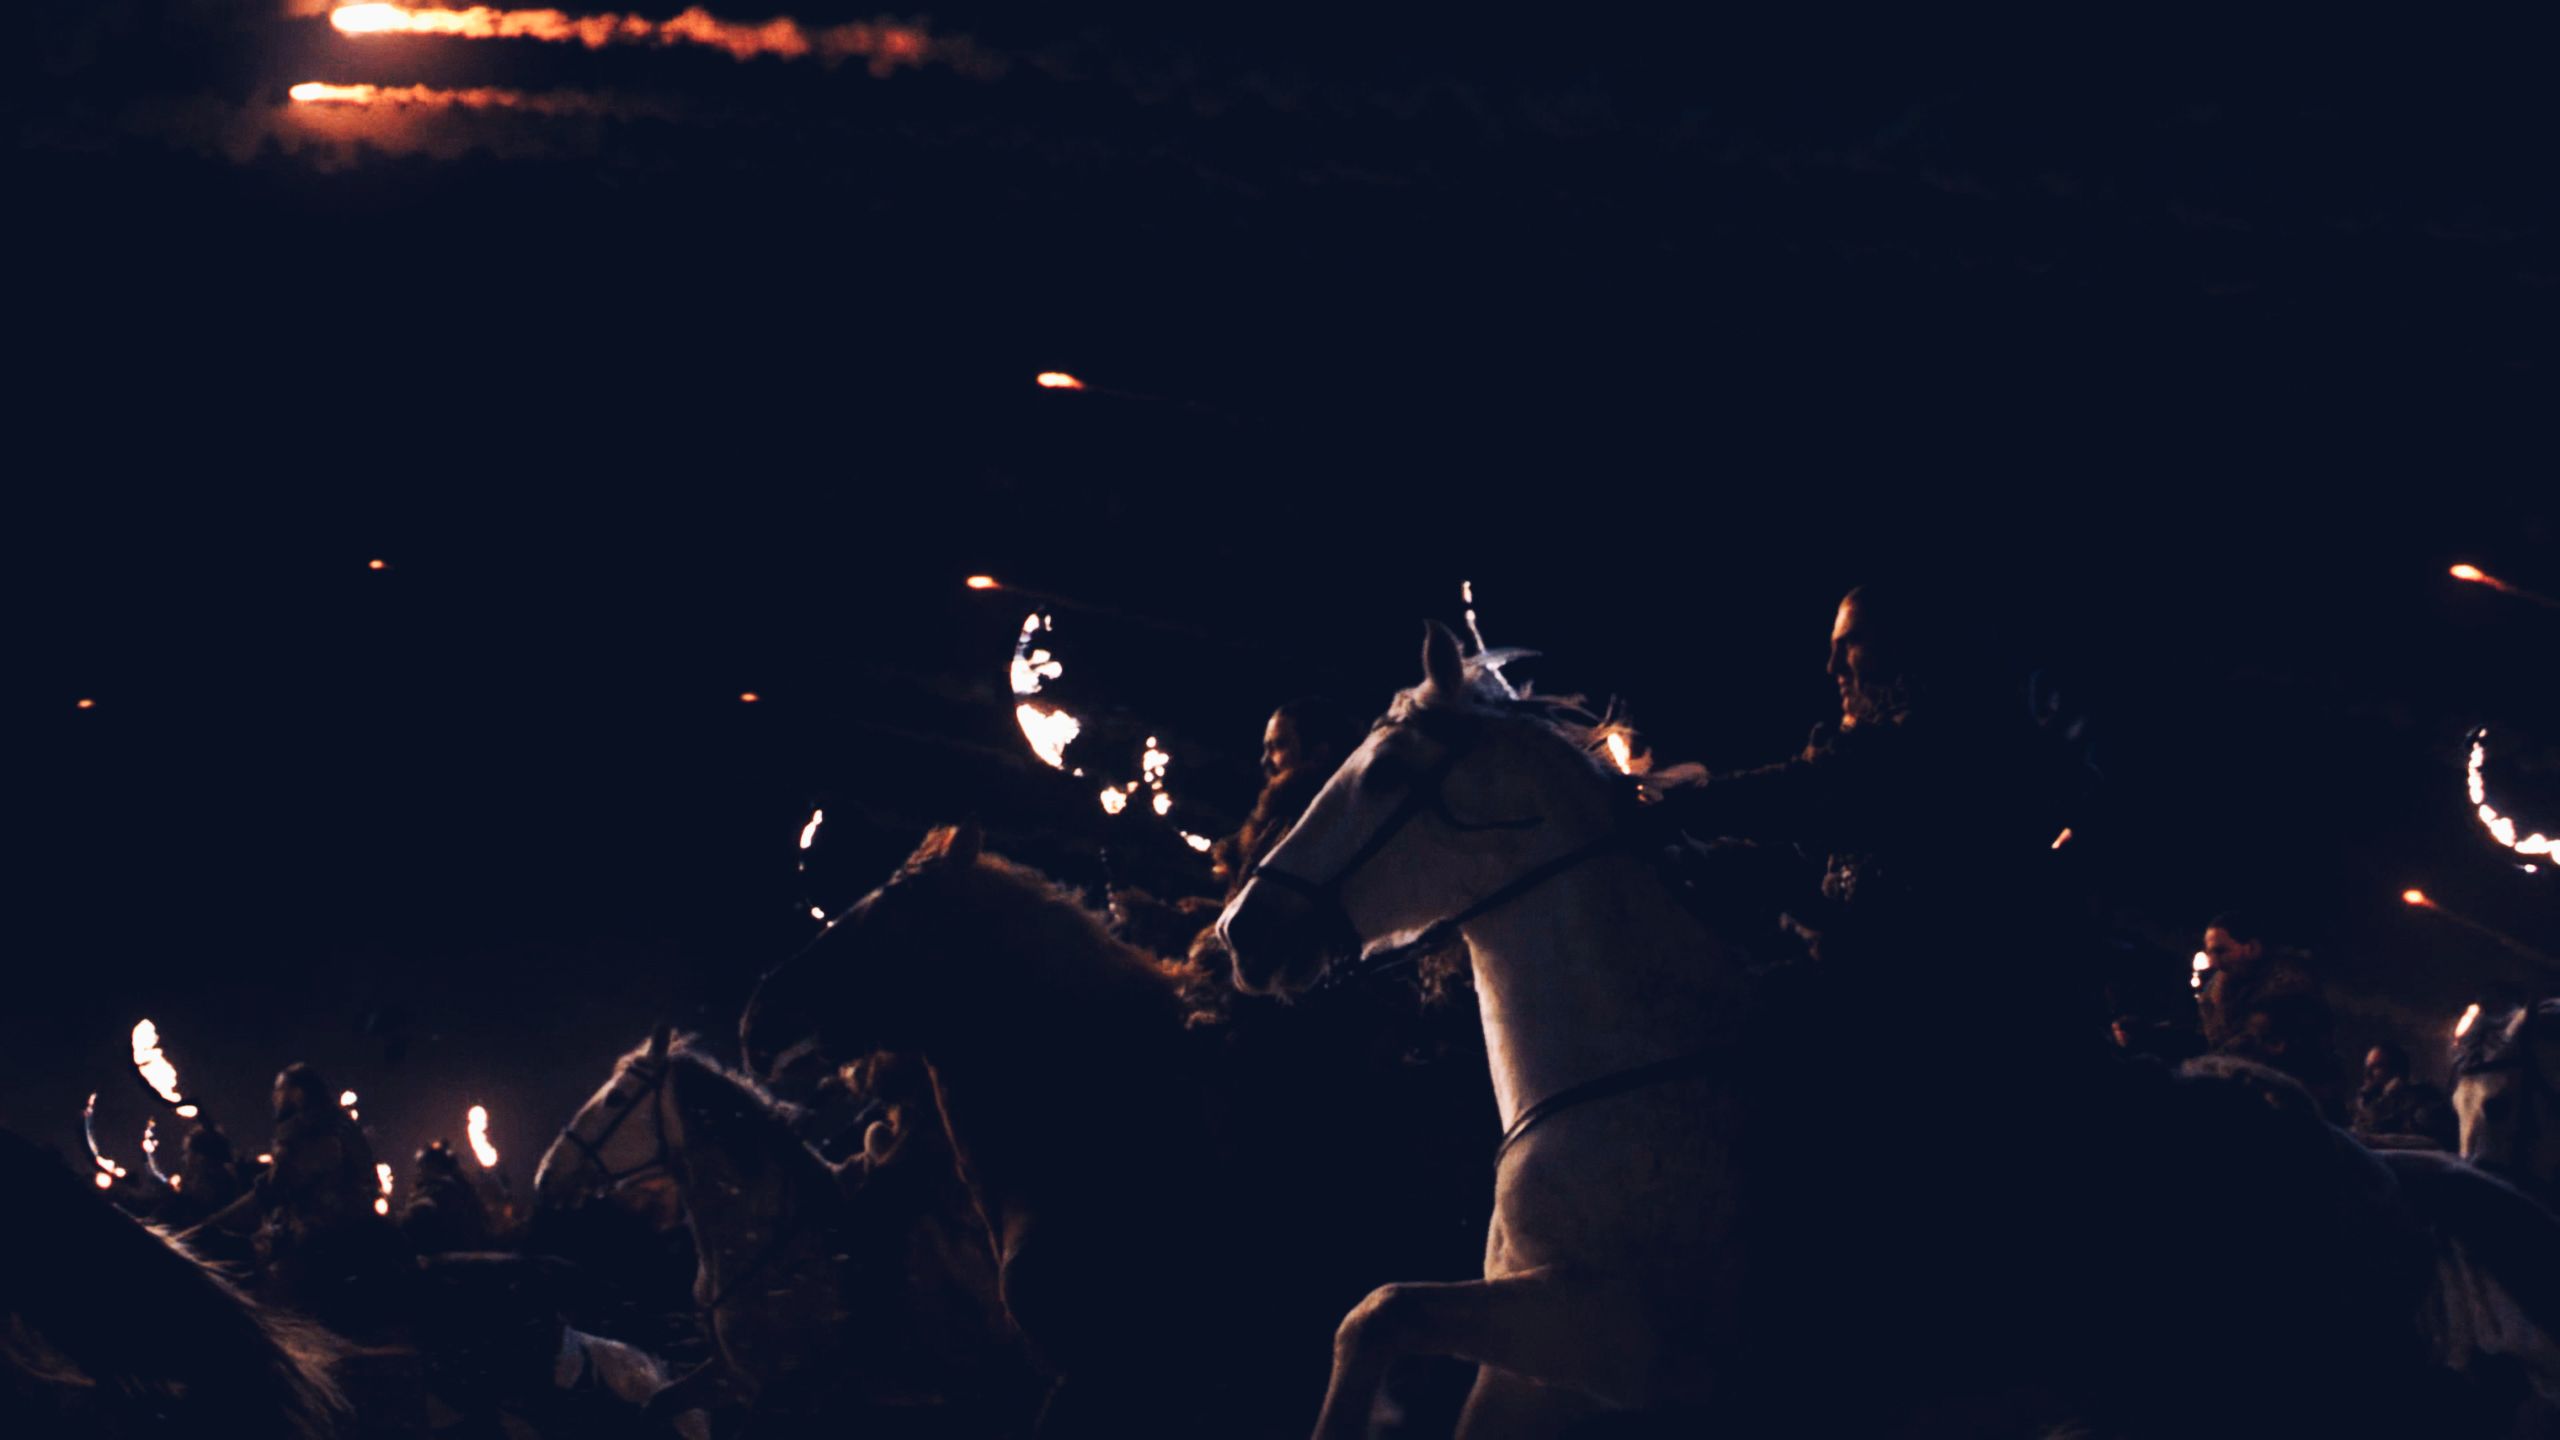 Game of Thrones - The Long Night Wallpapers - Álbum en Imgur